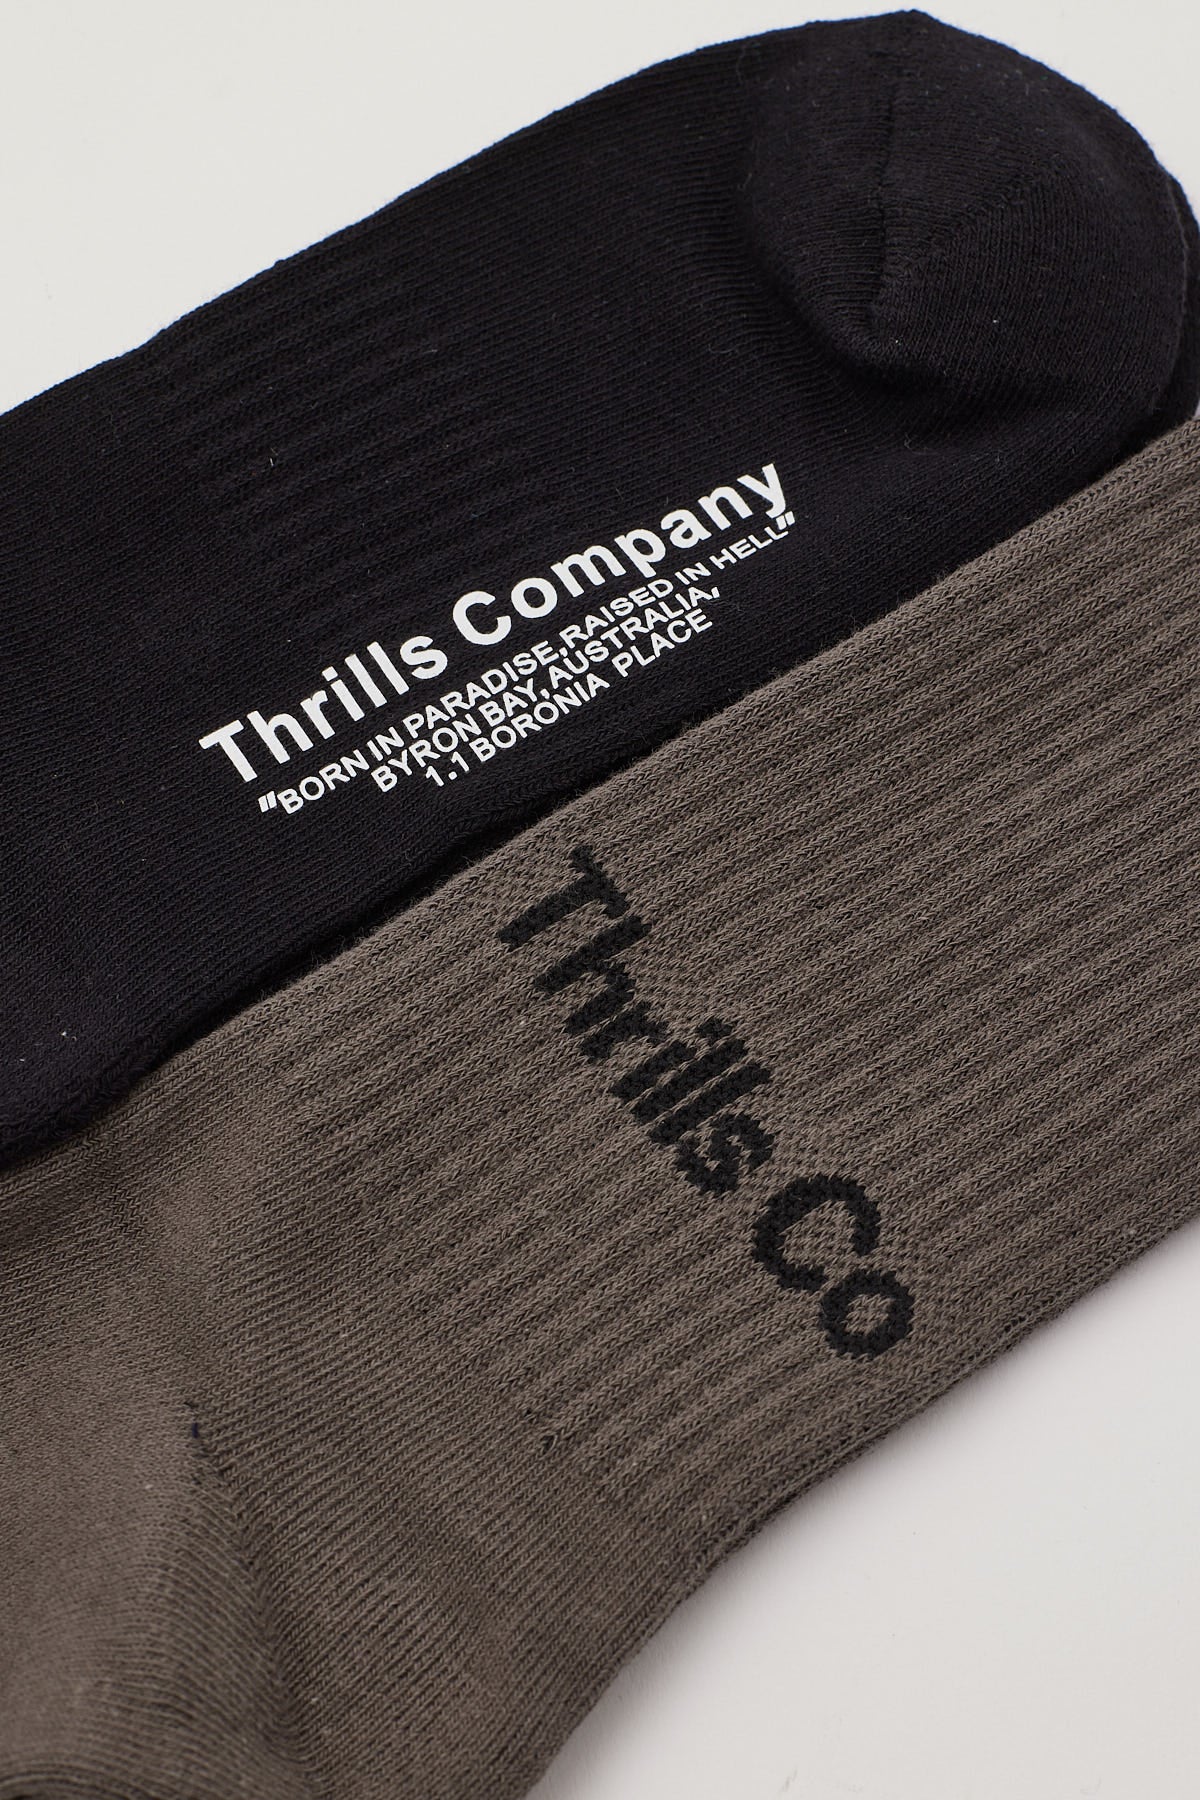 Thrills Coordinates 2 Pack Socks Black/Desert